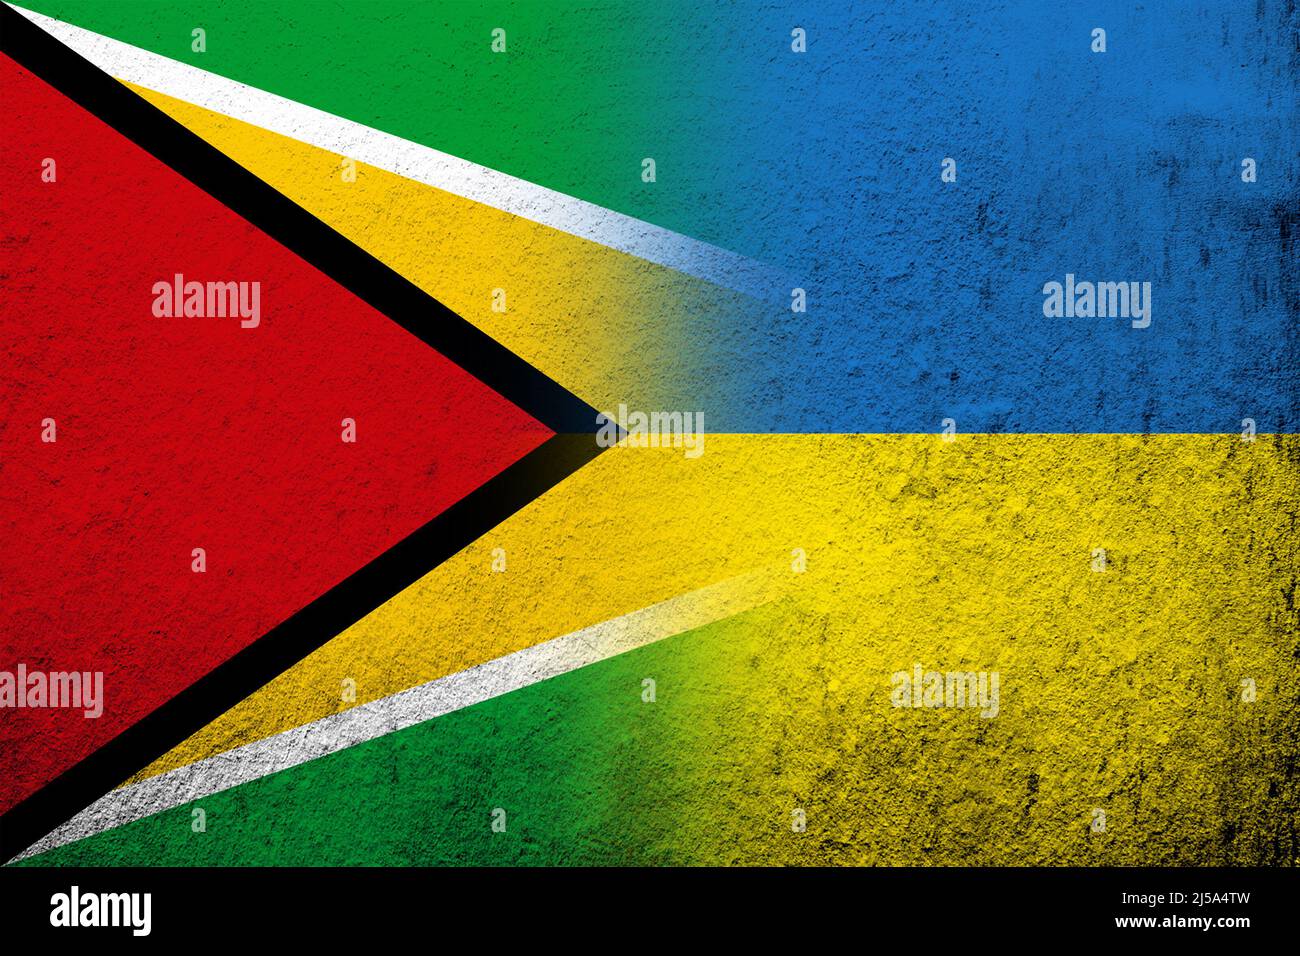 The Co-operative Republic of Guyana National flag with National flag of Ukraine. Grunge background Stock Photo